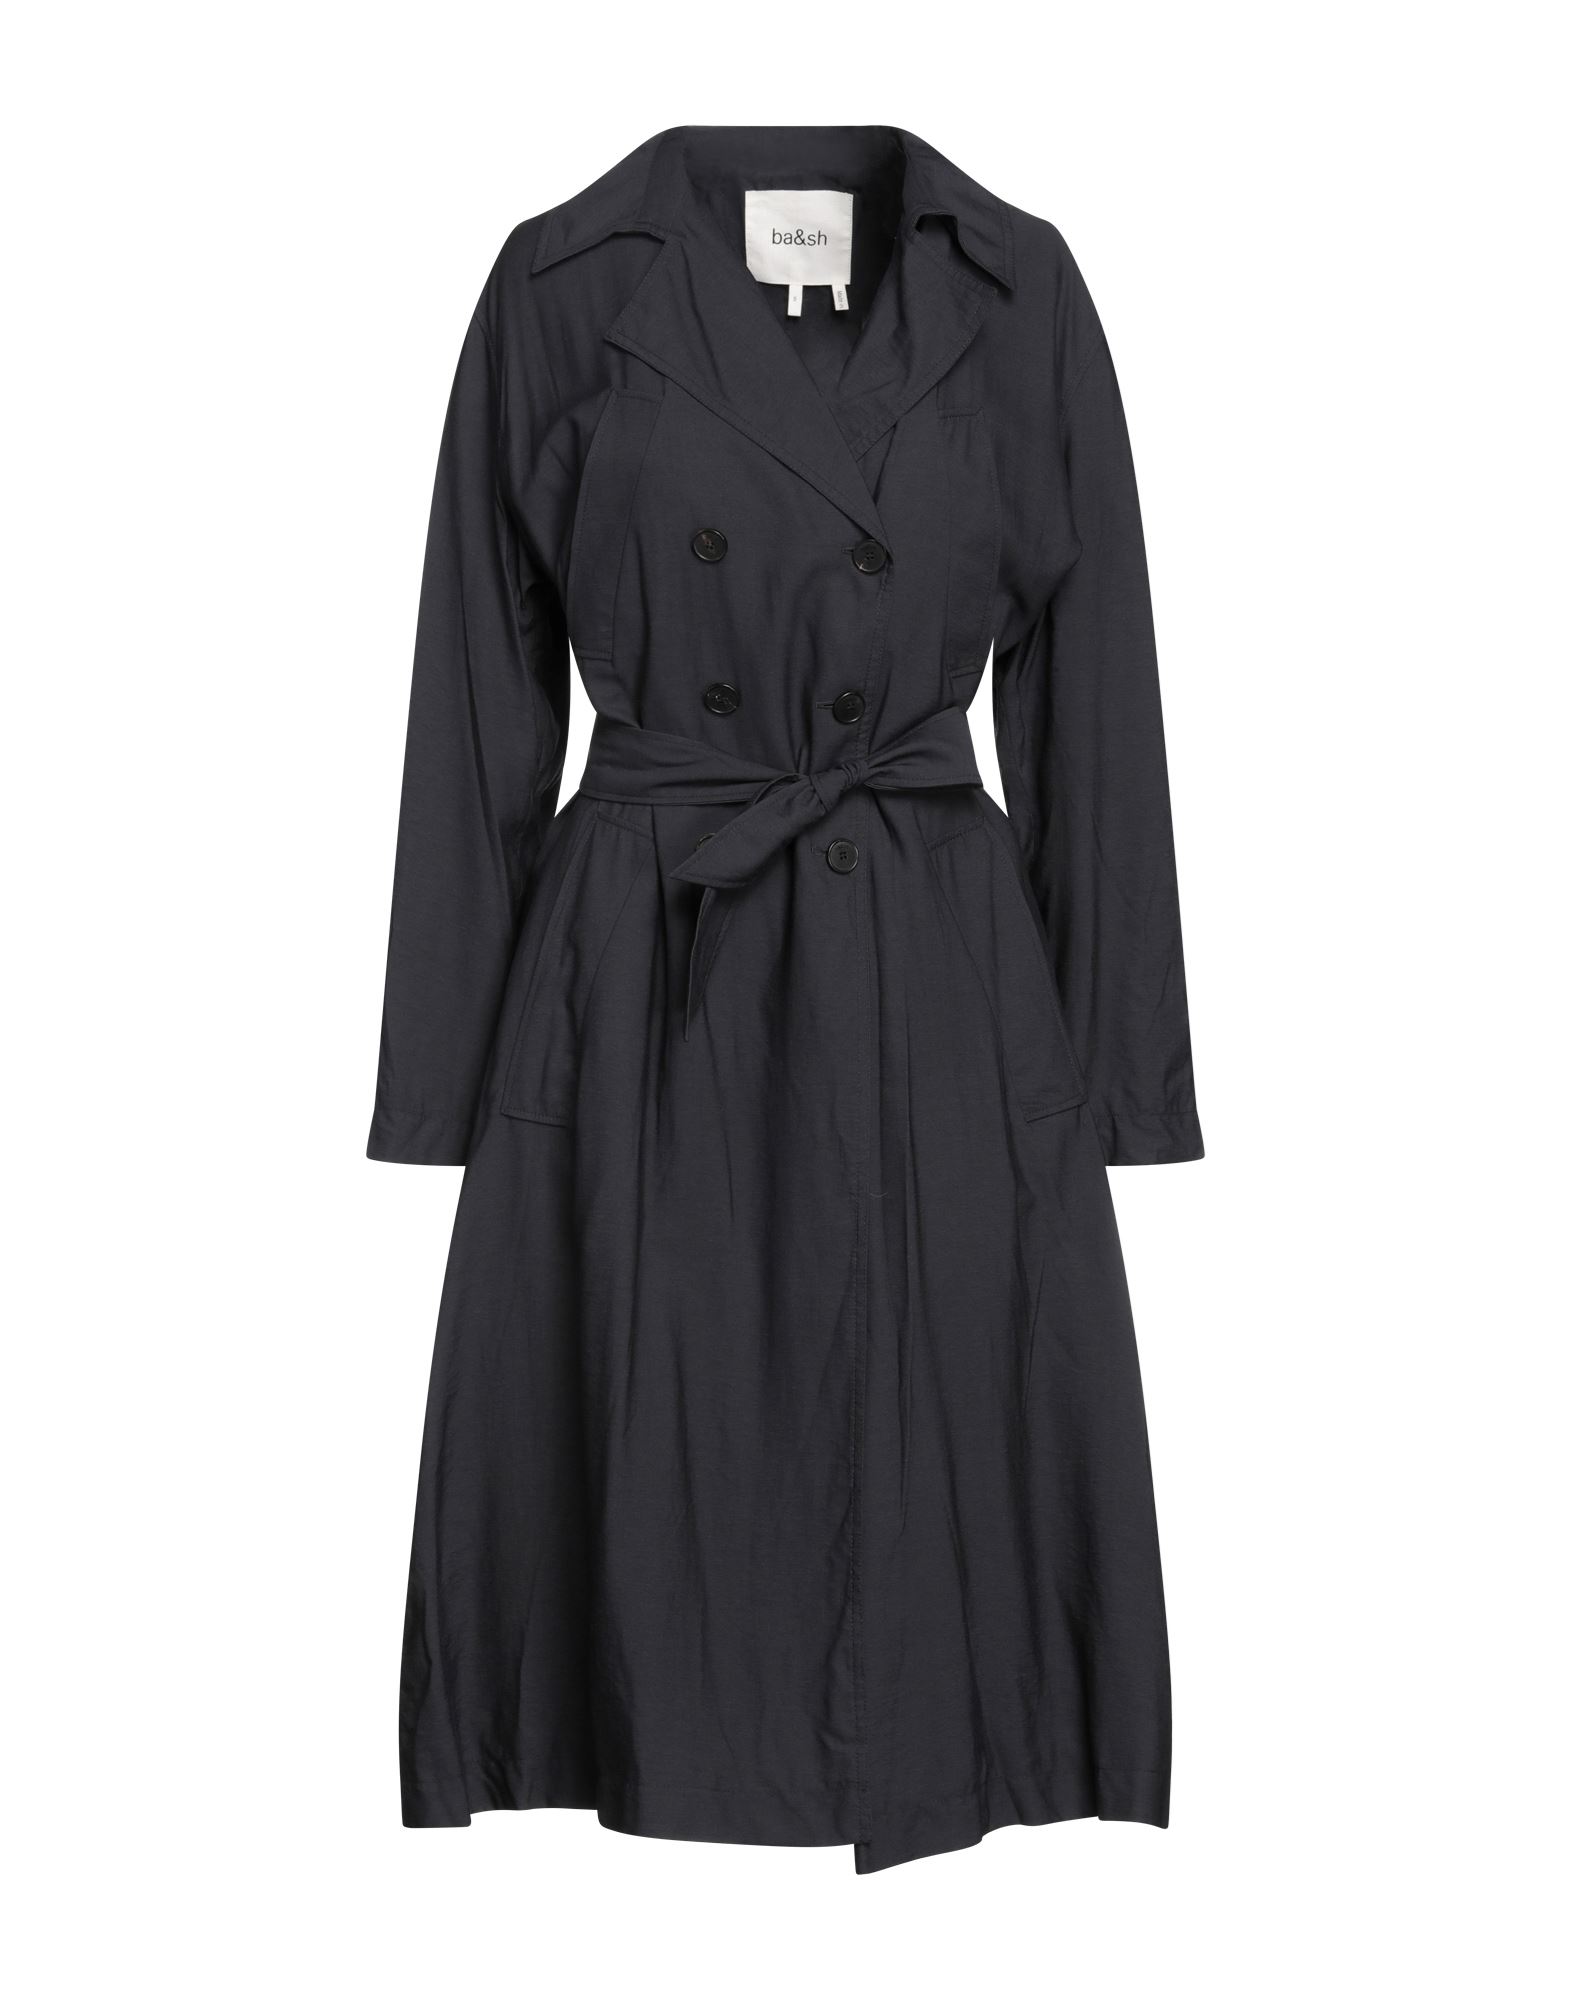 BA&SH Coats for Women | ModeSens